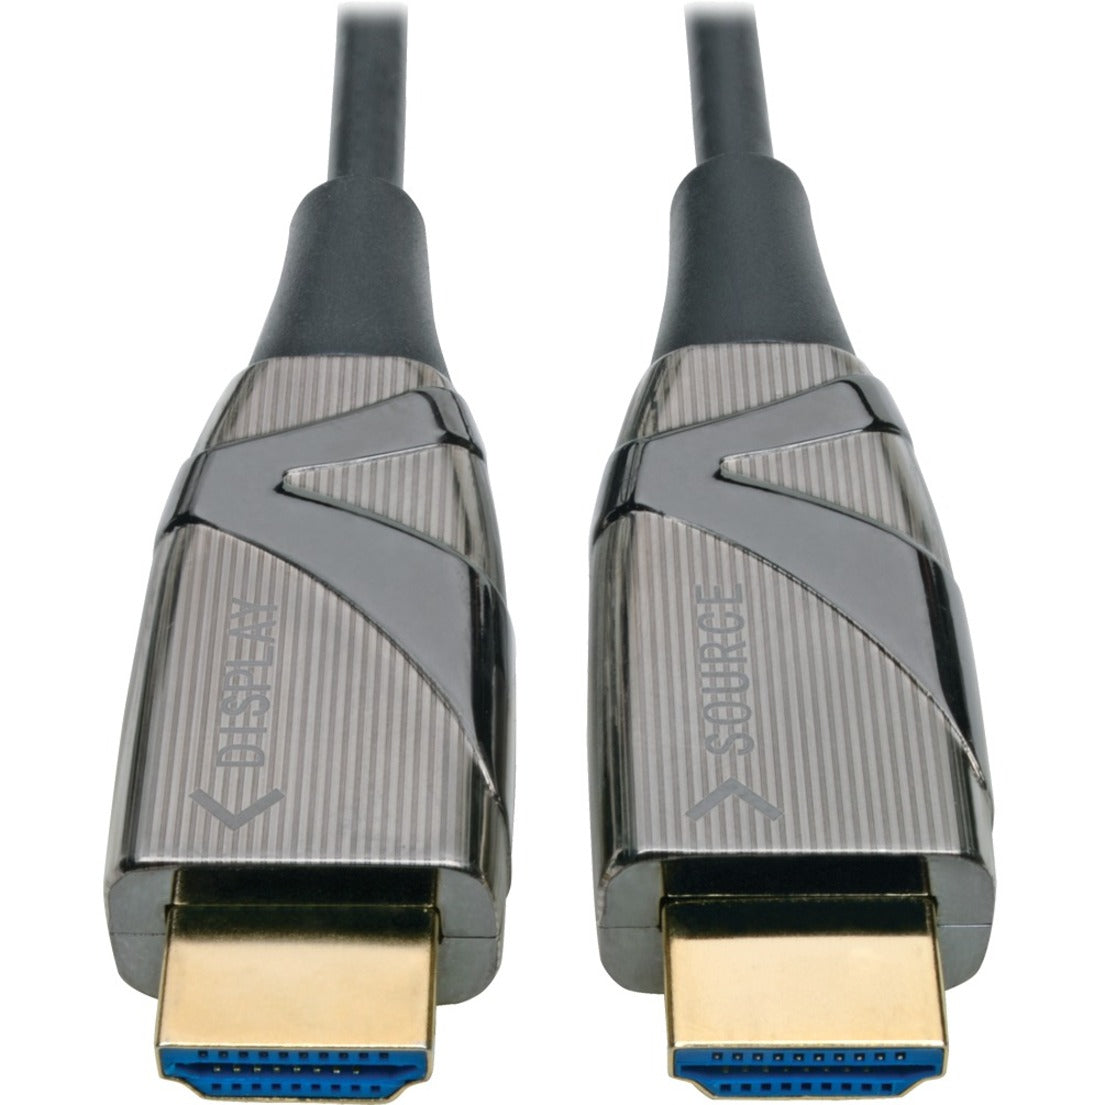 Tripp Lite P568-100M-FBR Fiber Optic Audio/Video Cable, 328 ft, HDMI 2.0, Black